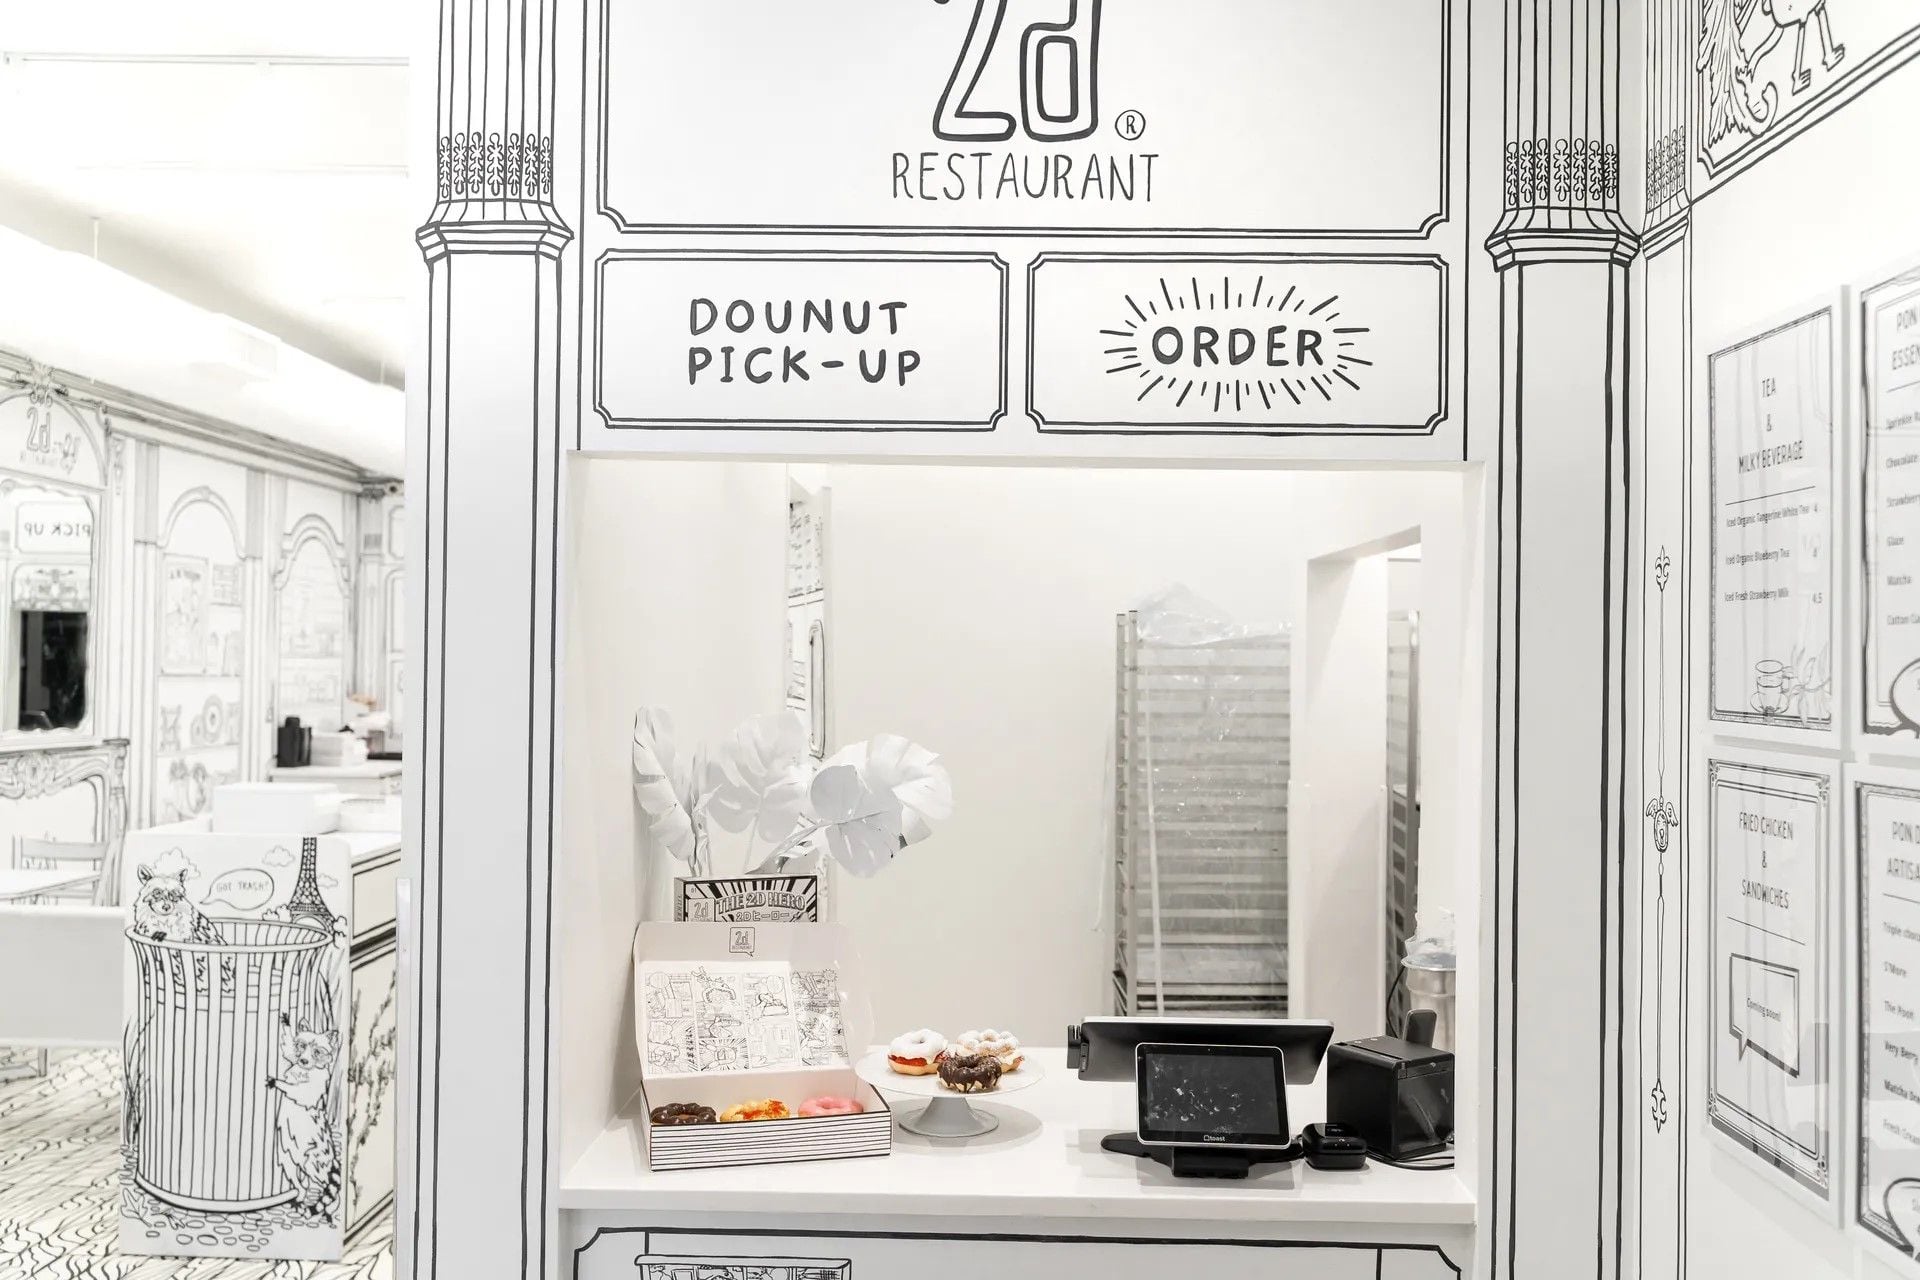 Adorable black and white doughnut pick-up kiosk at the 2D Café Chicago.